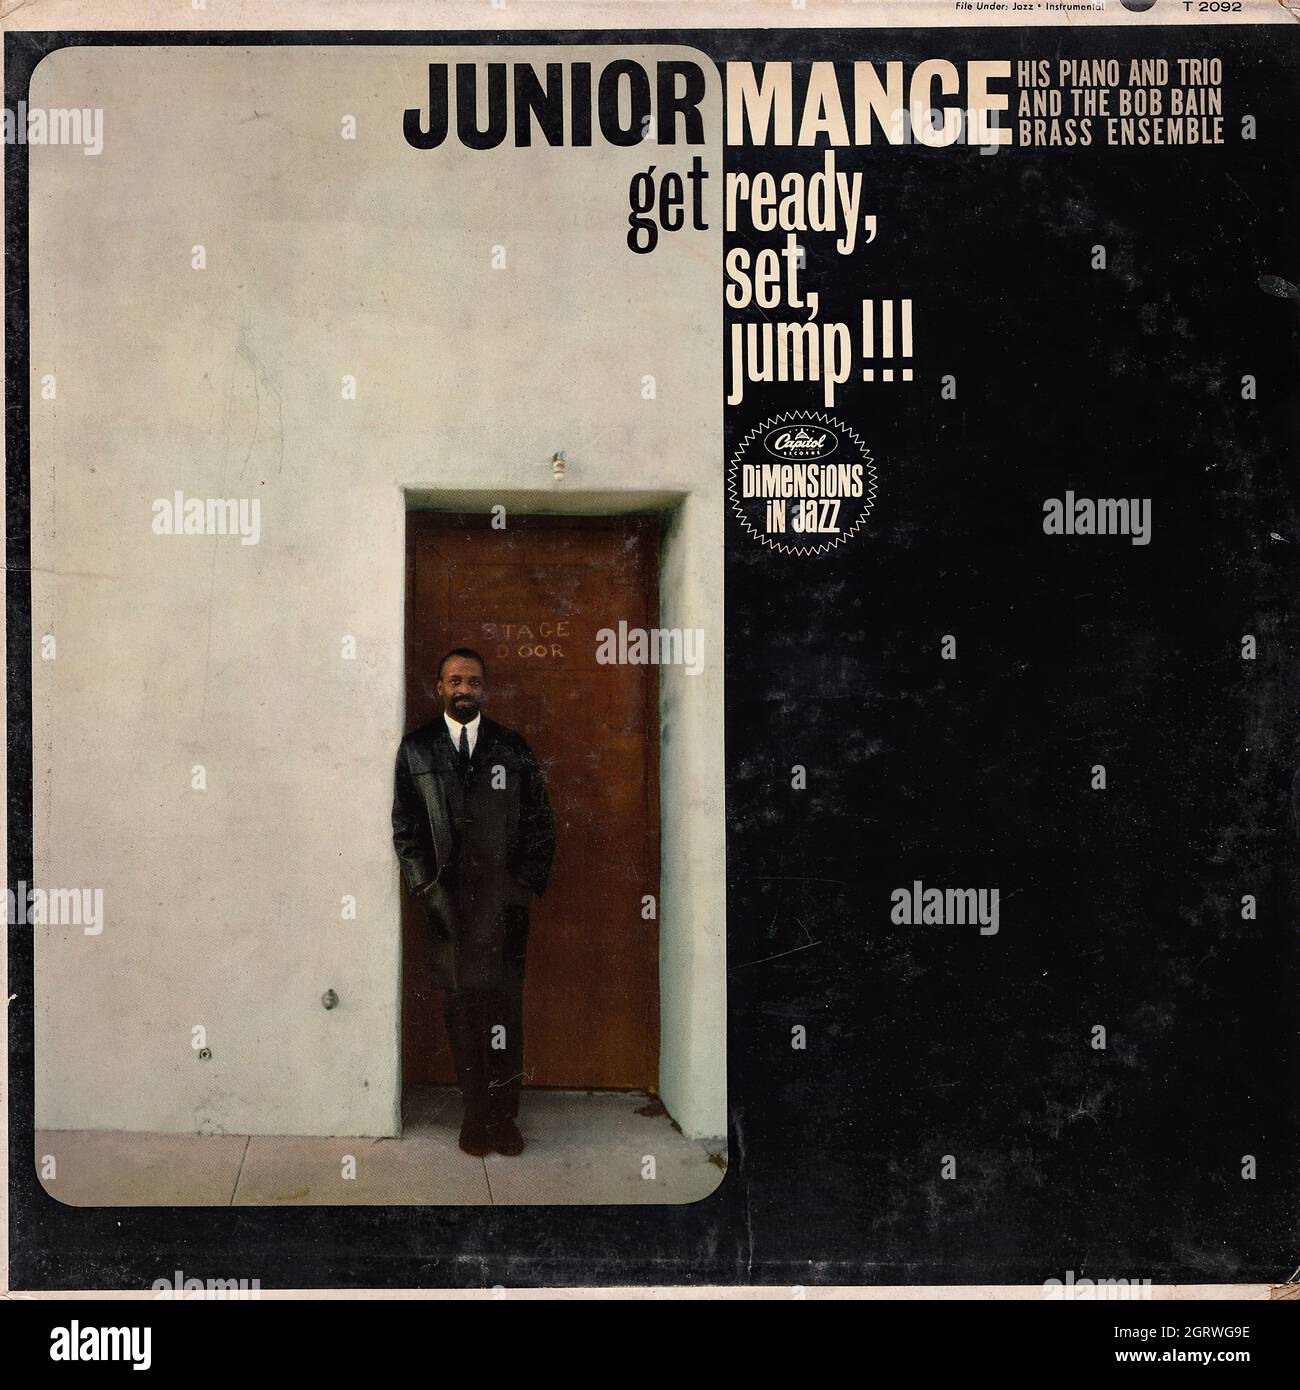 Junior Mance, Piano & Trio + Bob Bain Brass Ensemble - Get ready, set, jump!!!  - Vintage Vinyl Record Cover Stock Photo - Alamy